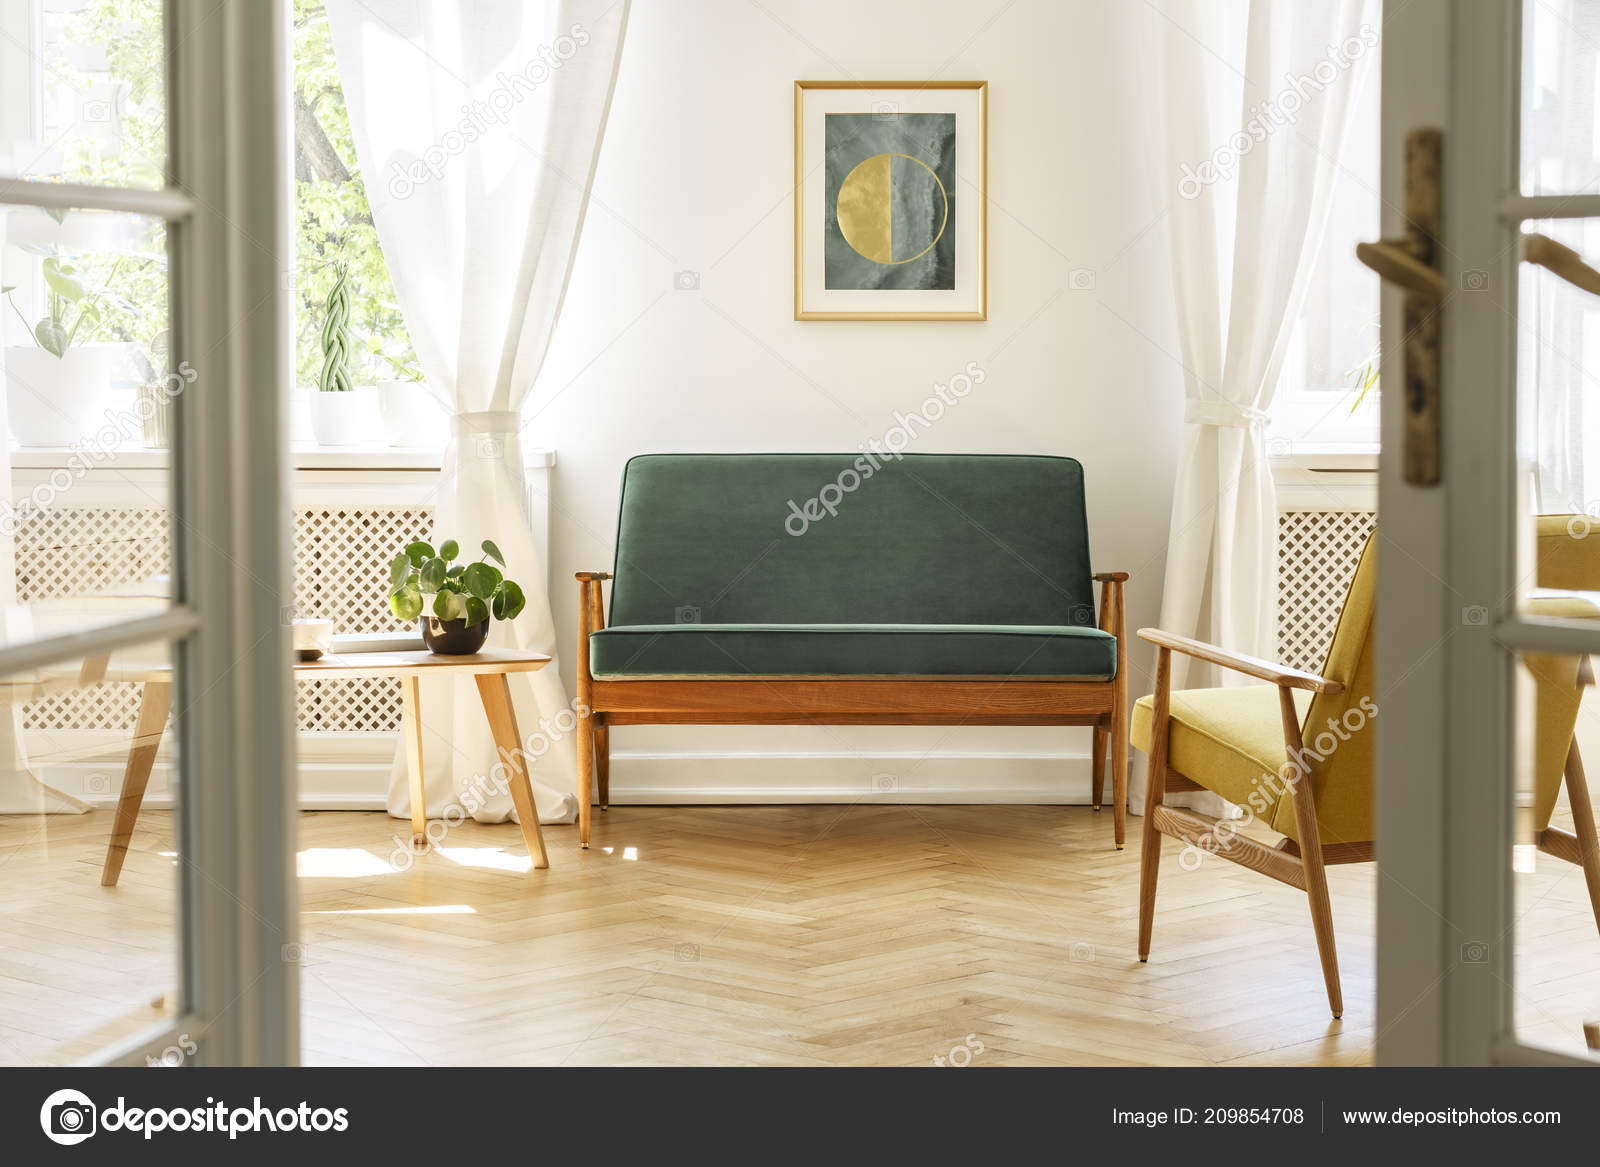 Real Photo Vintage Living Room Interior Green Sofa Poster Coffee Stock Photo Photographeeeu 209854708